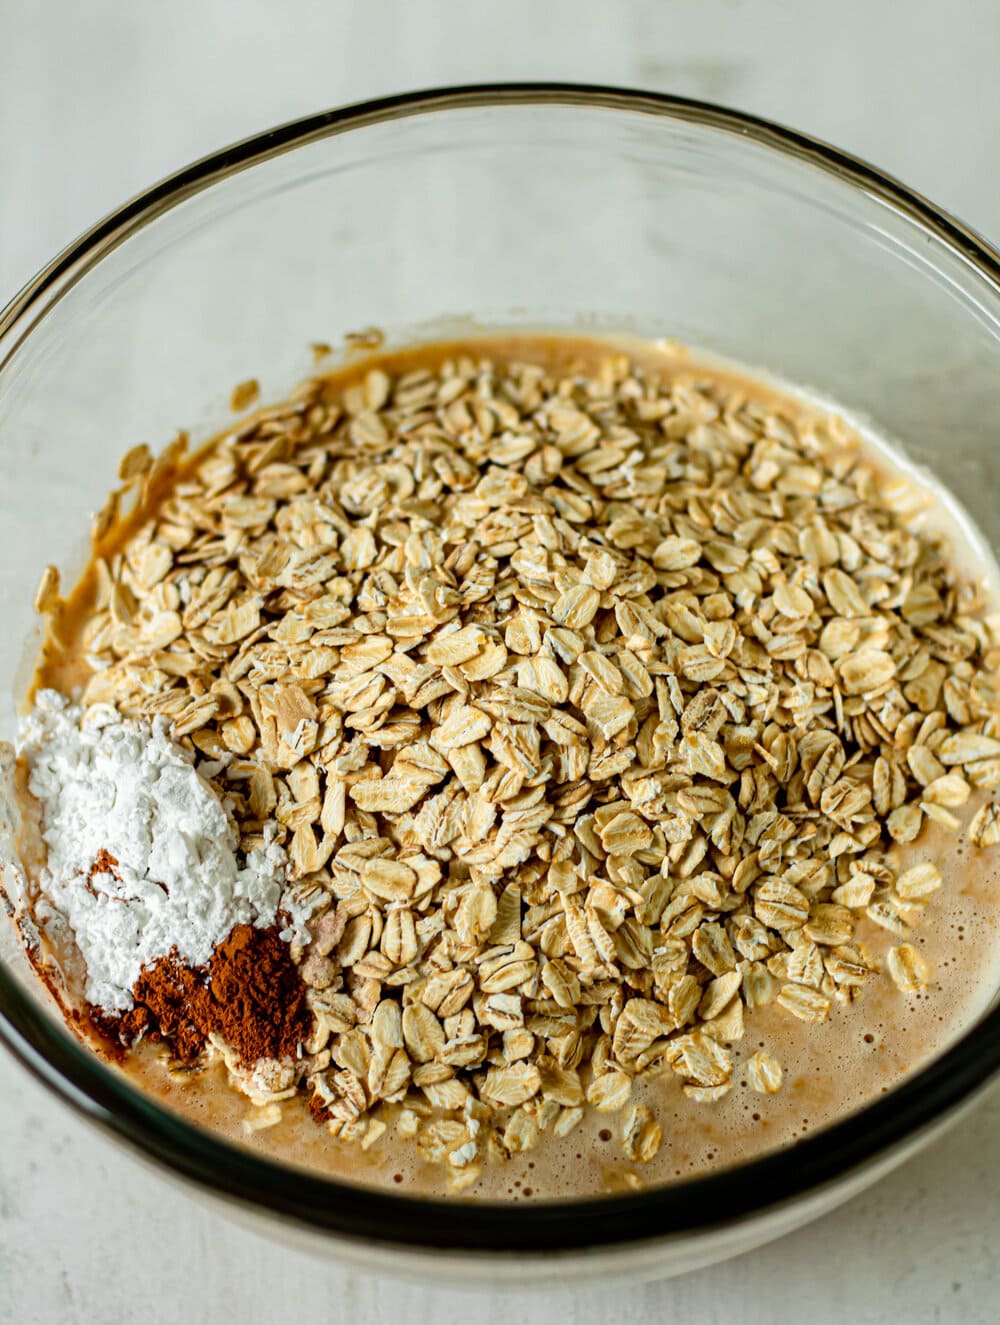 oats, cinnamon, baking powder in a glass mixing bowl